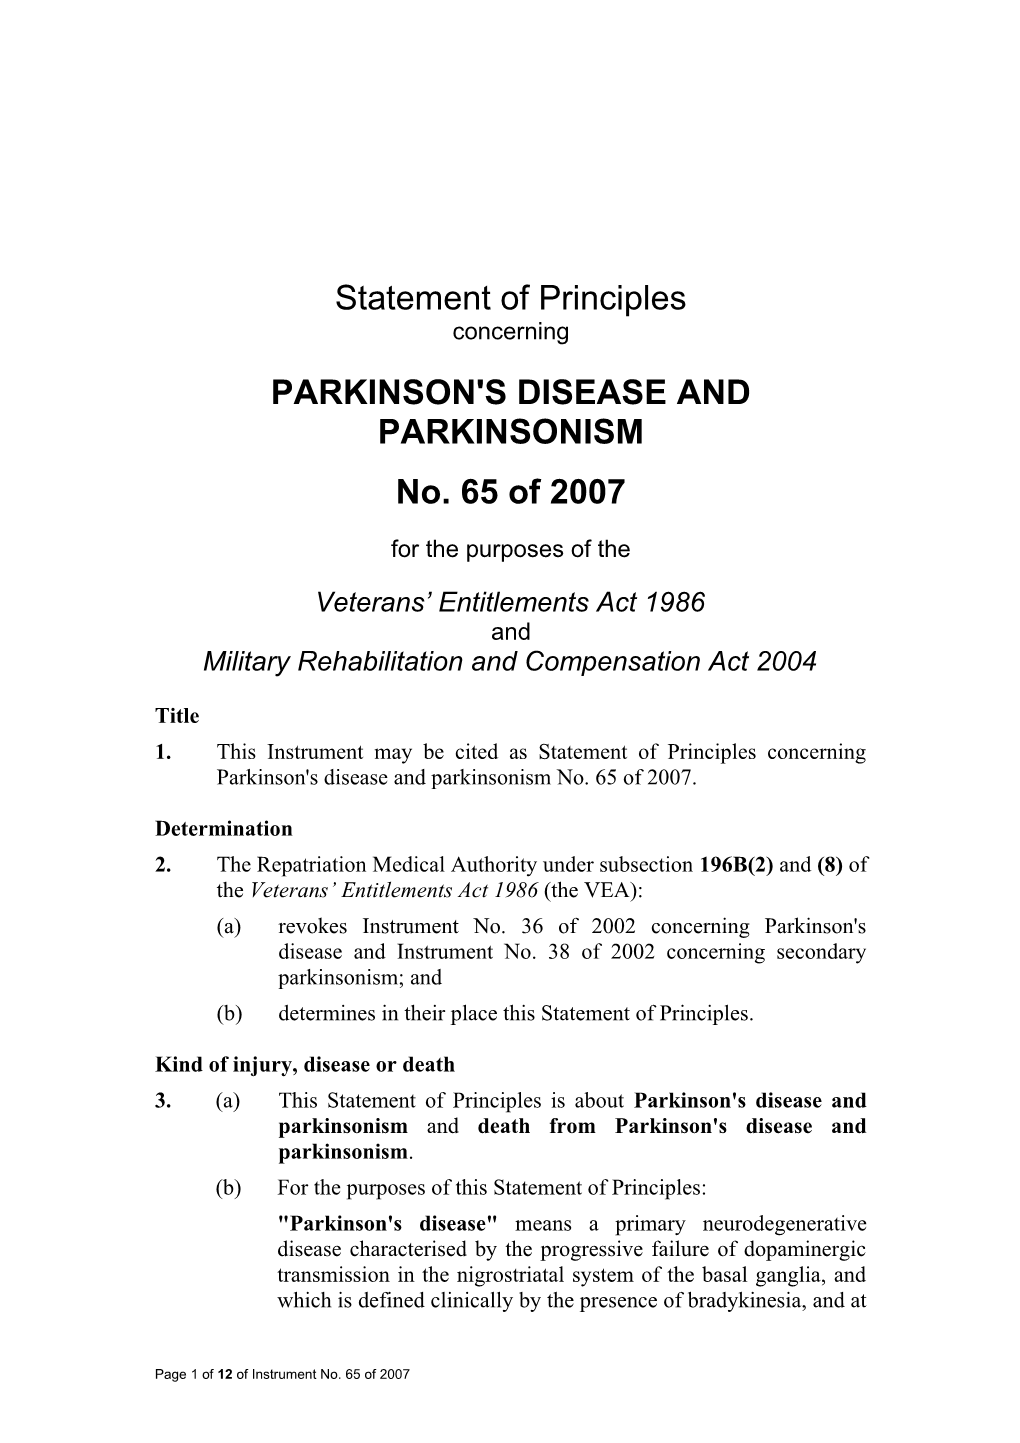 Parkinson's Disease and Parkinsonism